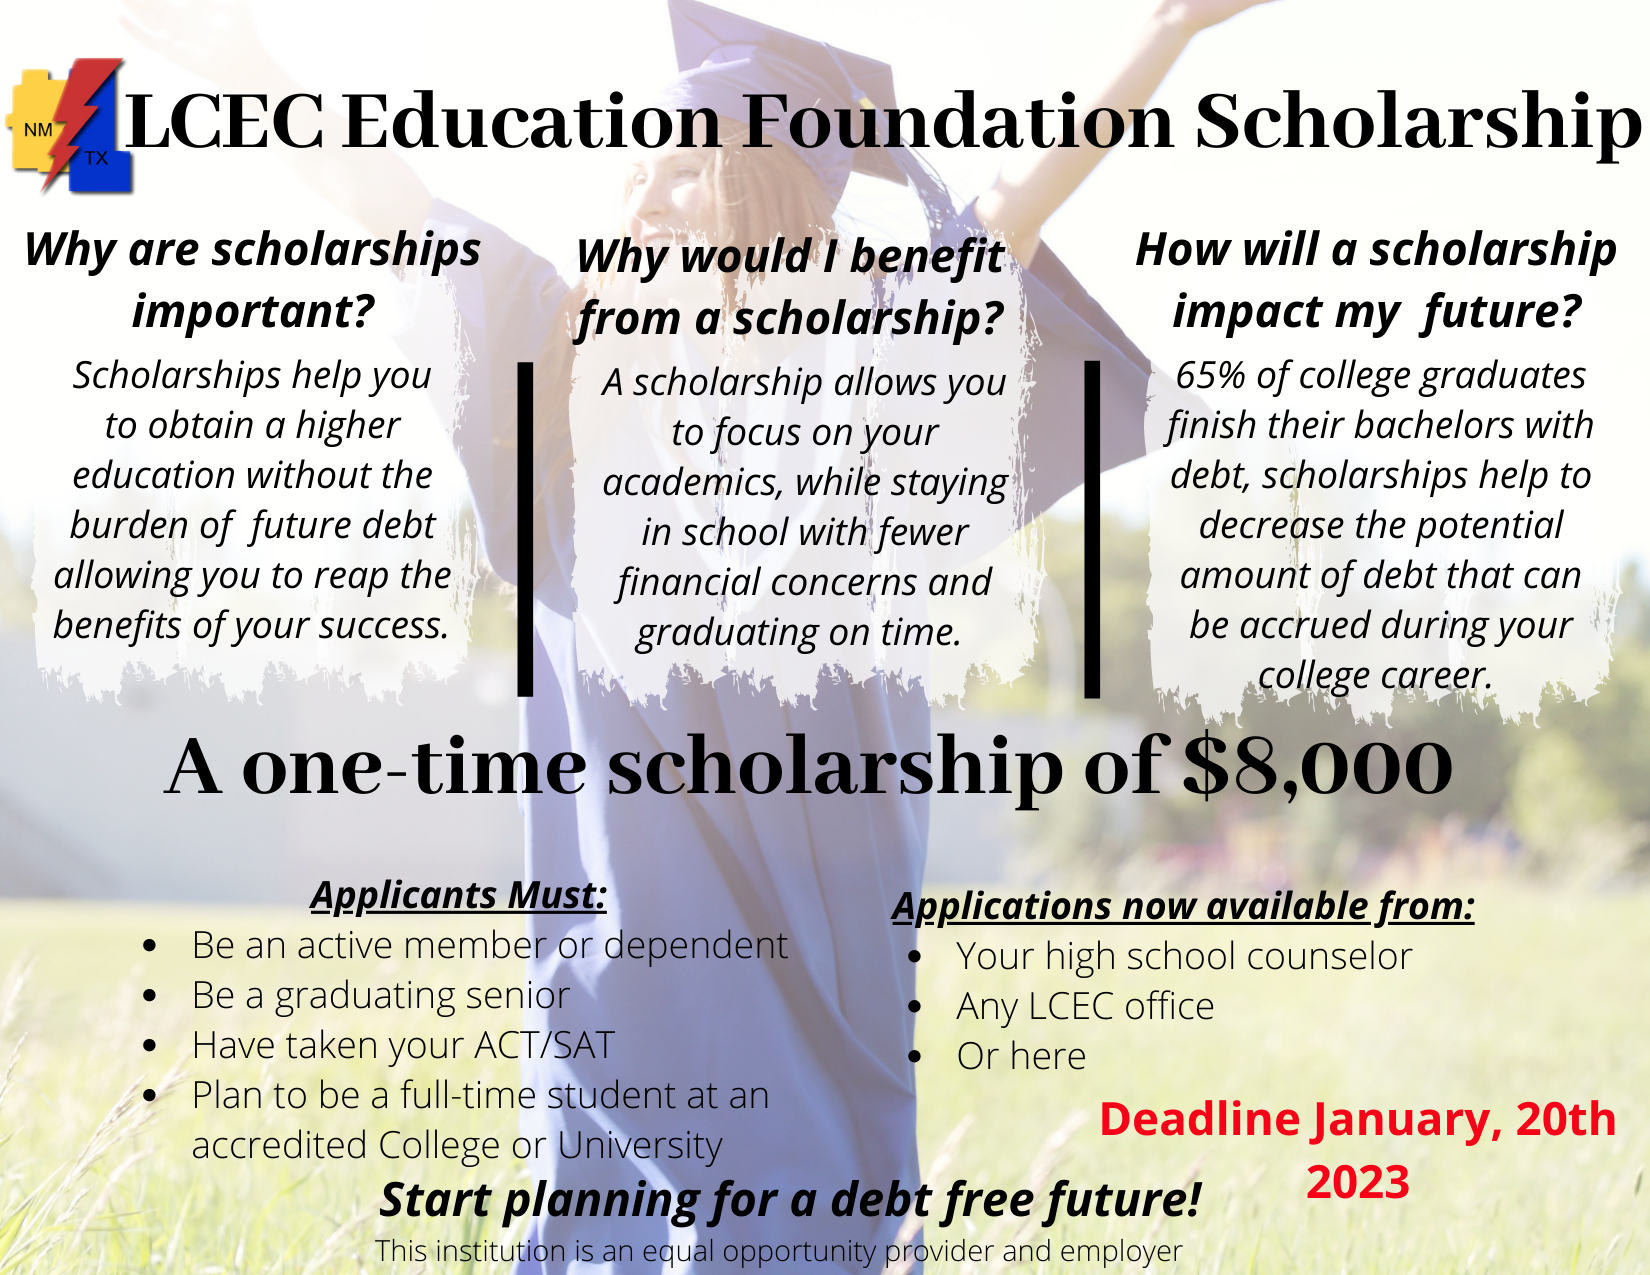 LCEC Educational Foundation Scholarship